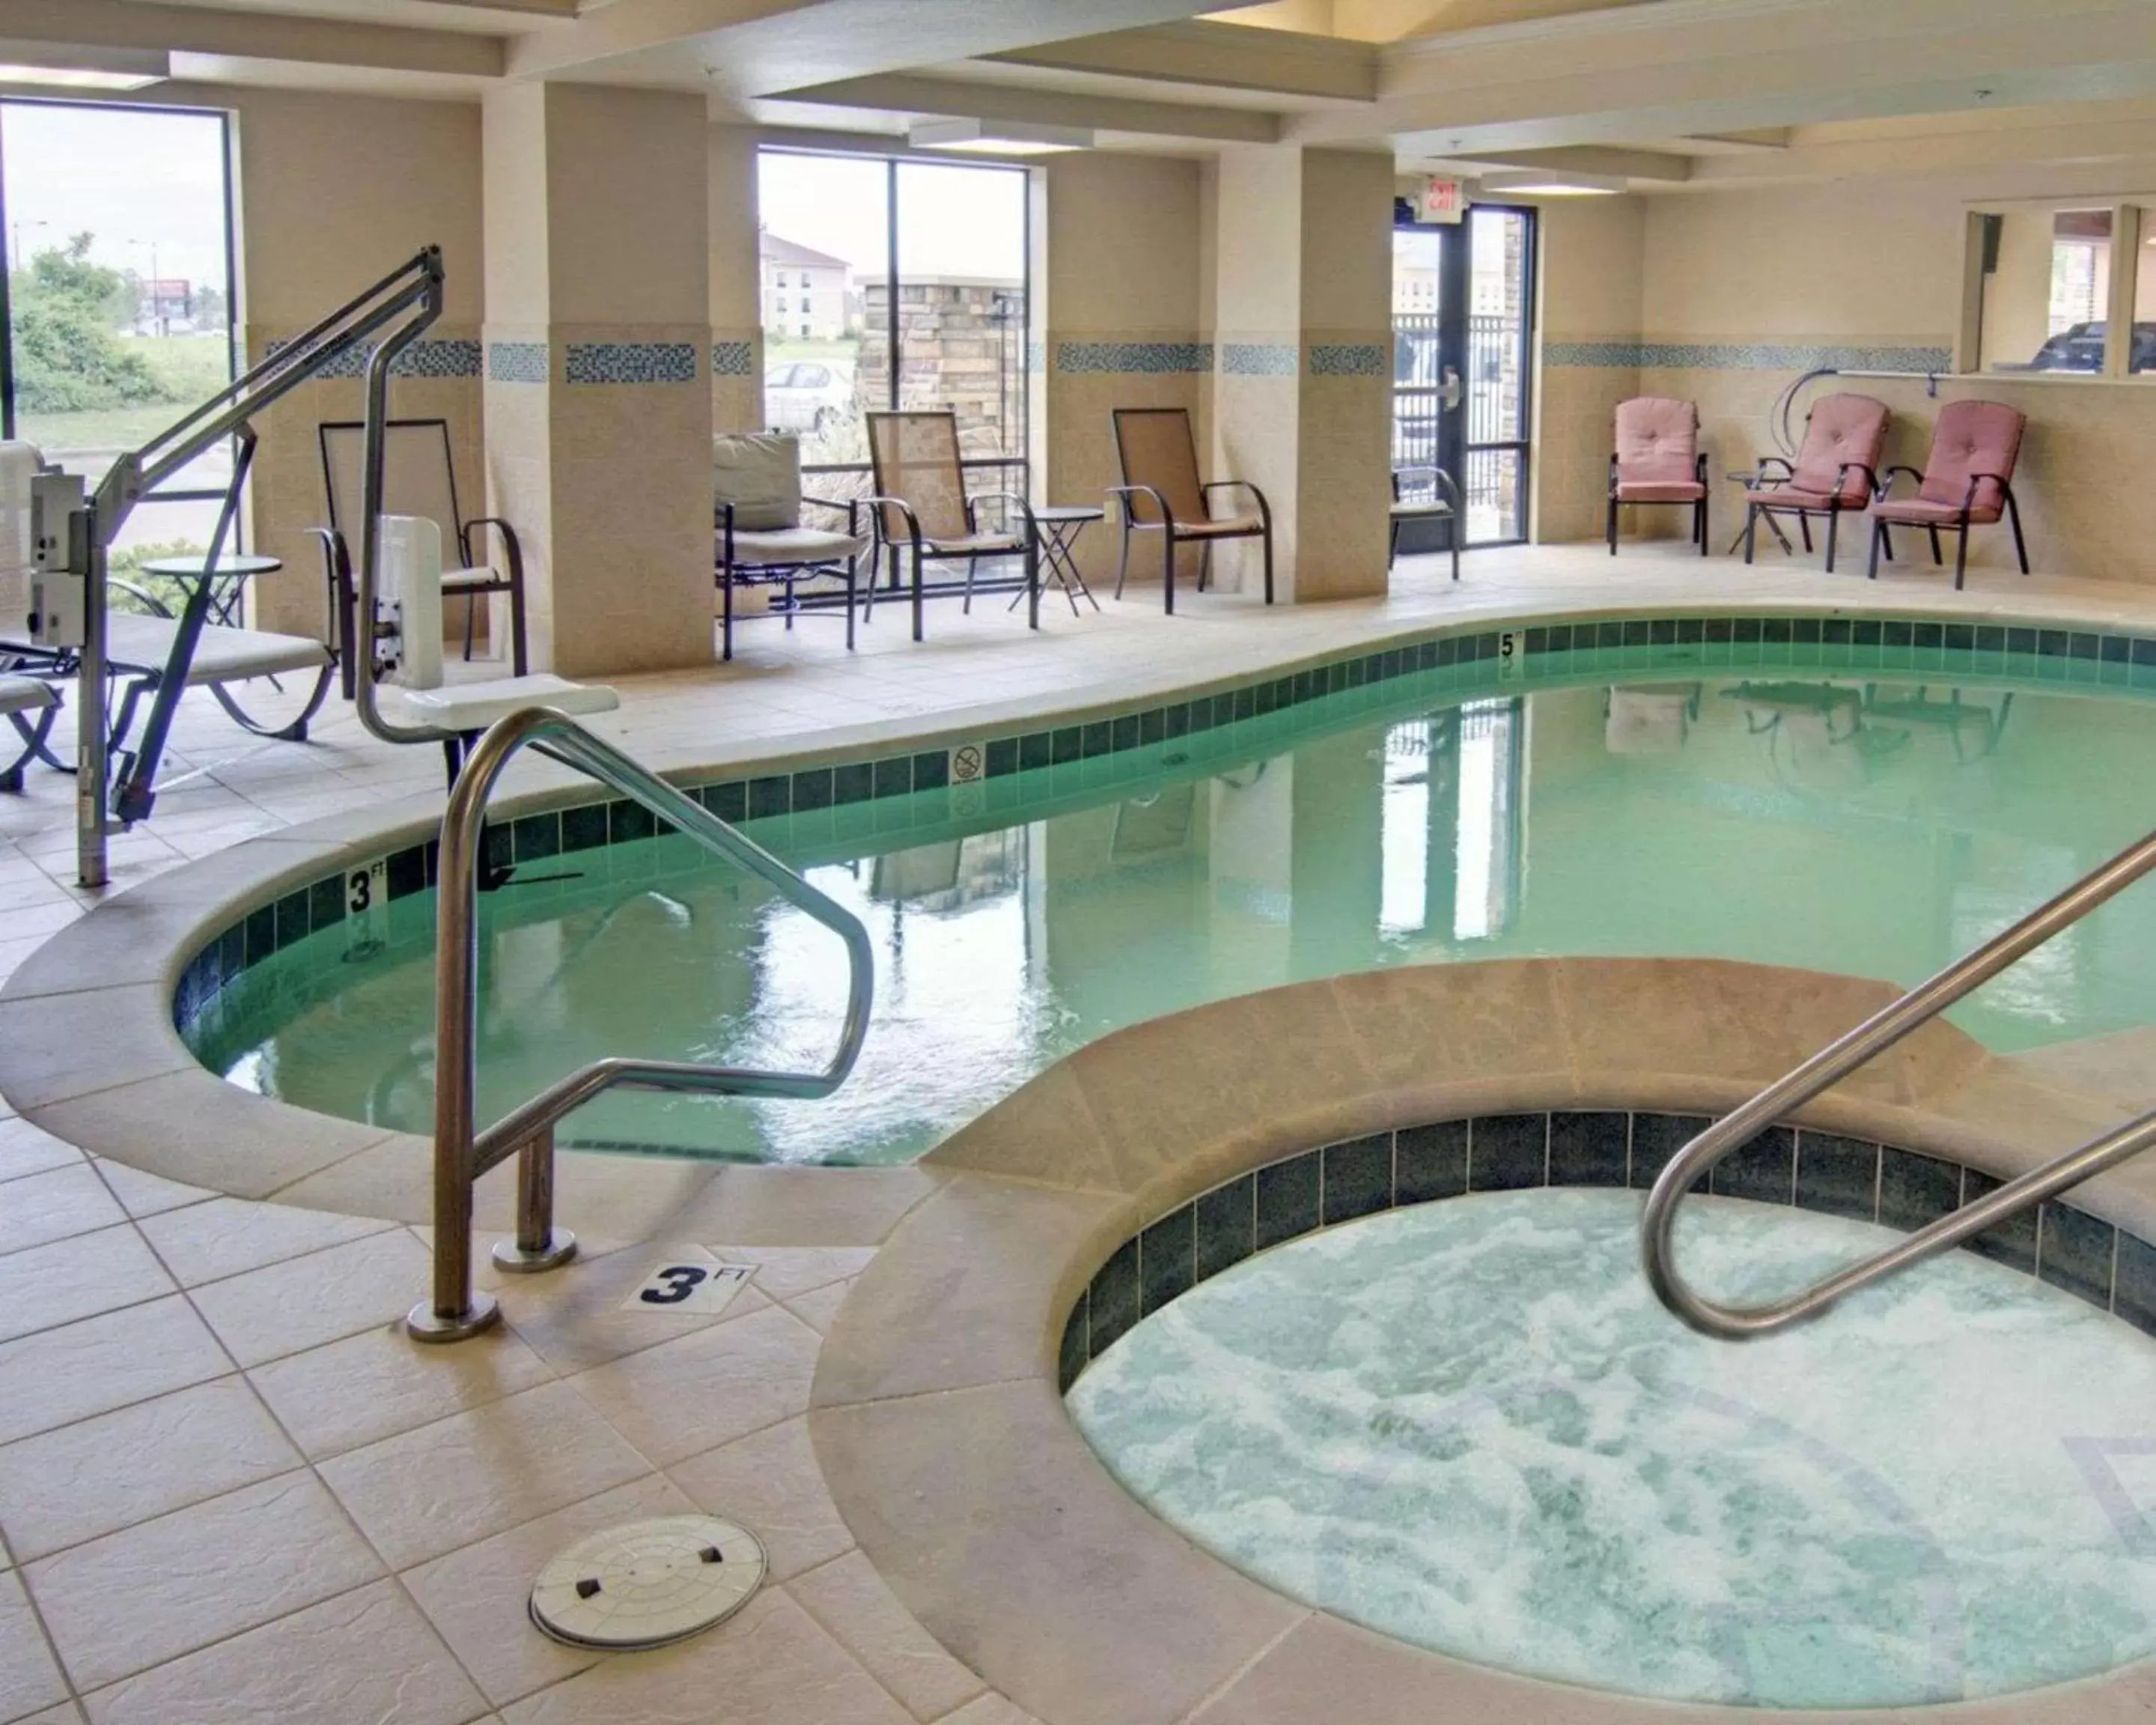 On site, Swimming Pool in Comfort Suites Texarkana Arkansas